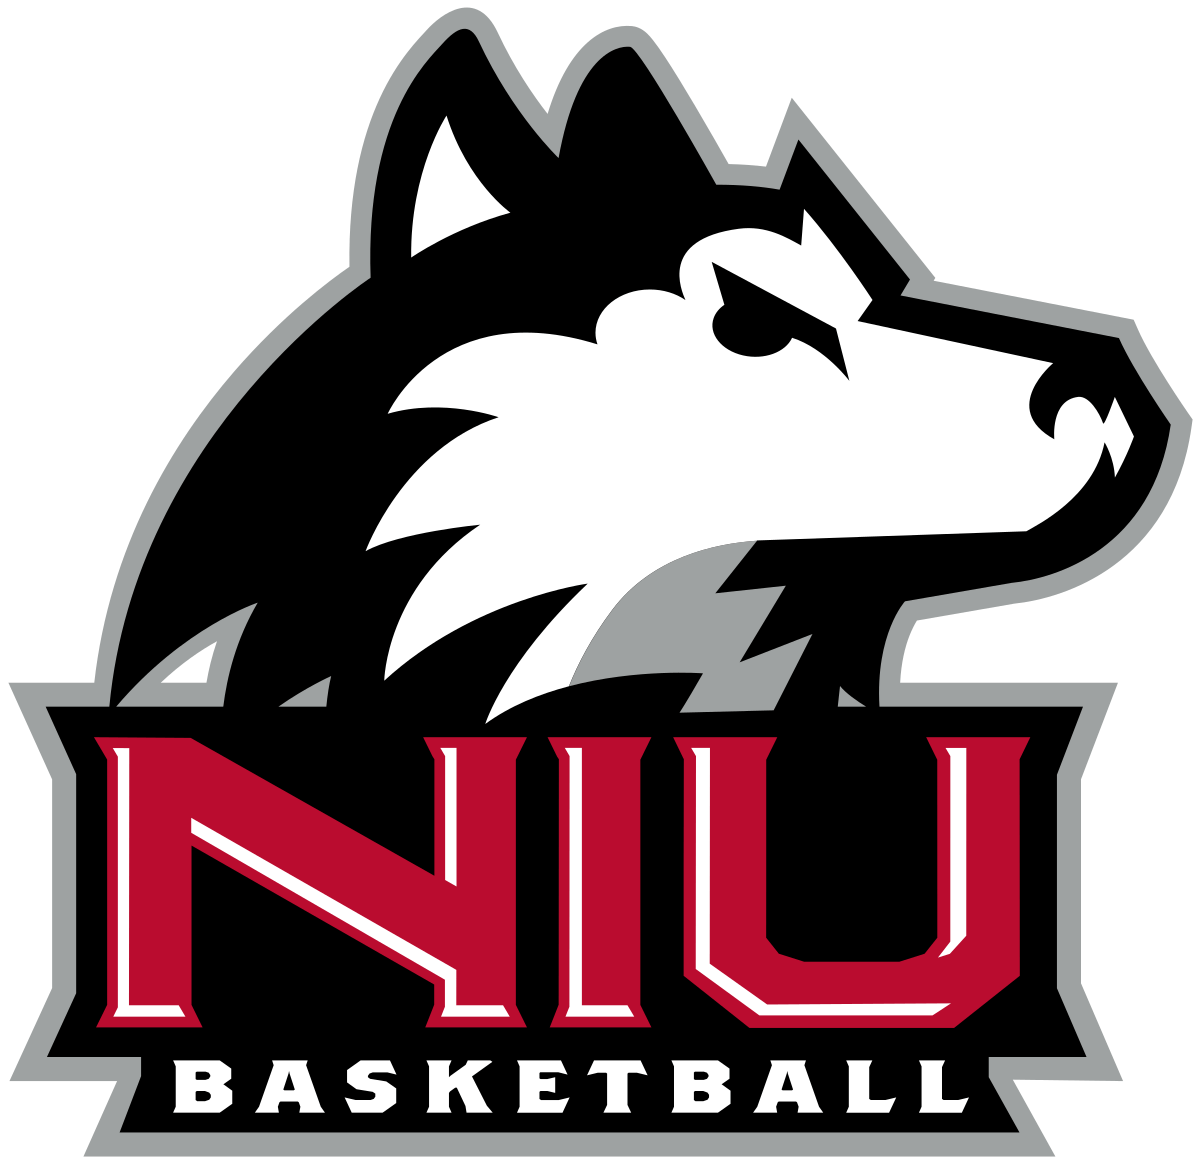 Red and White Basketball Logo - Northern Illinois Huskies men's basketball